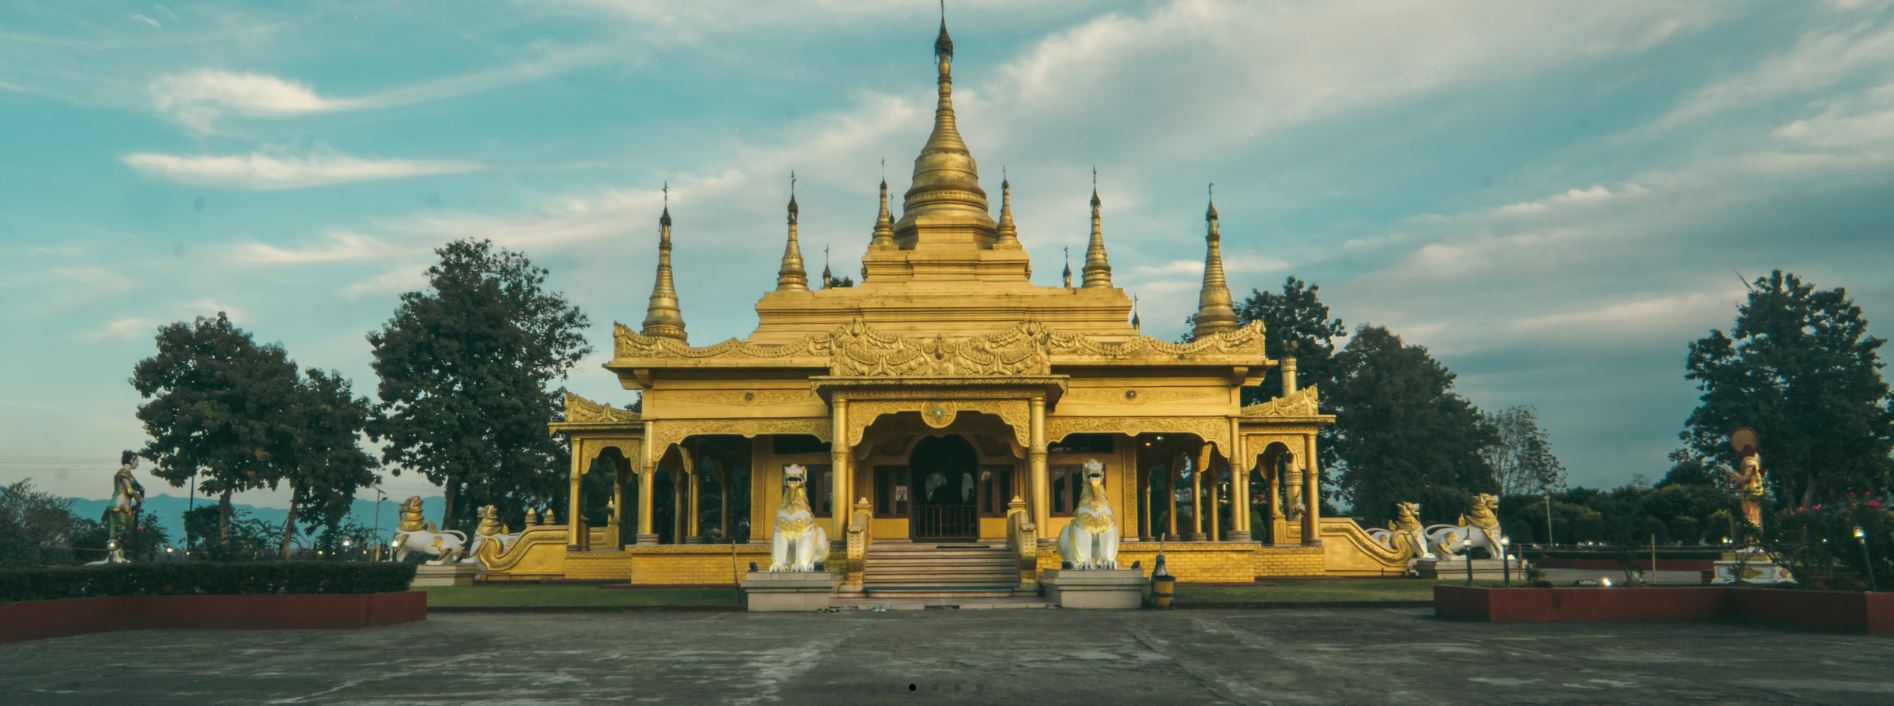 golden pagoda temple